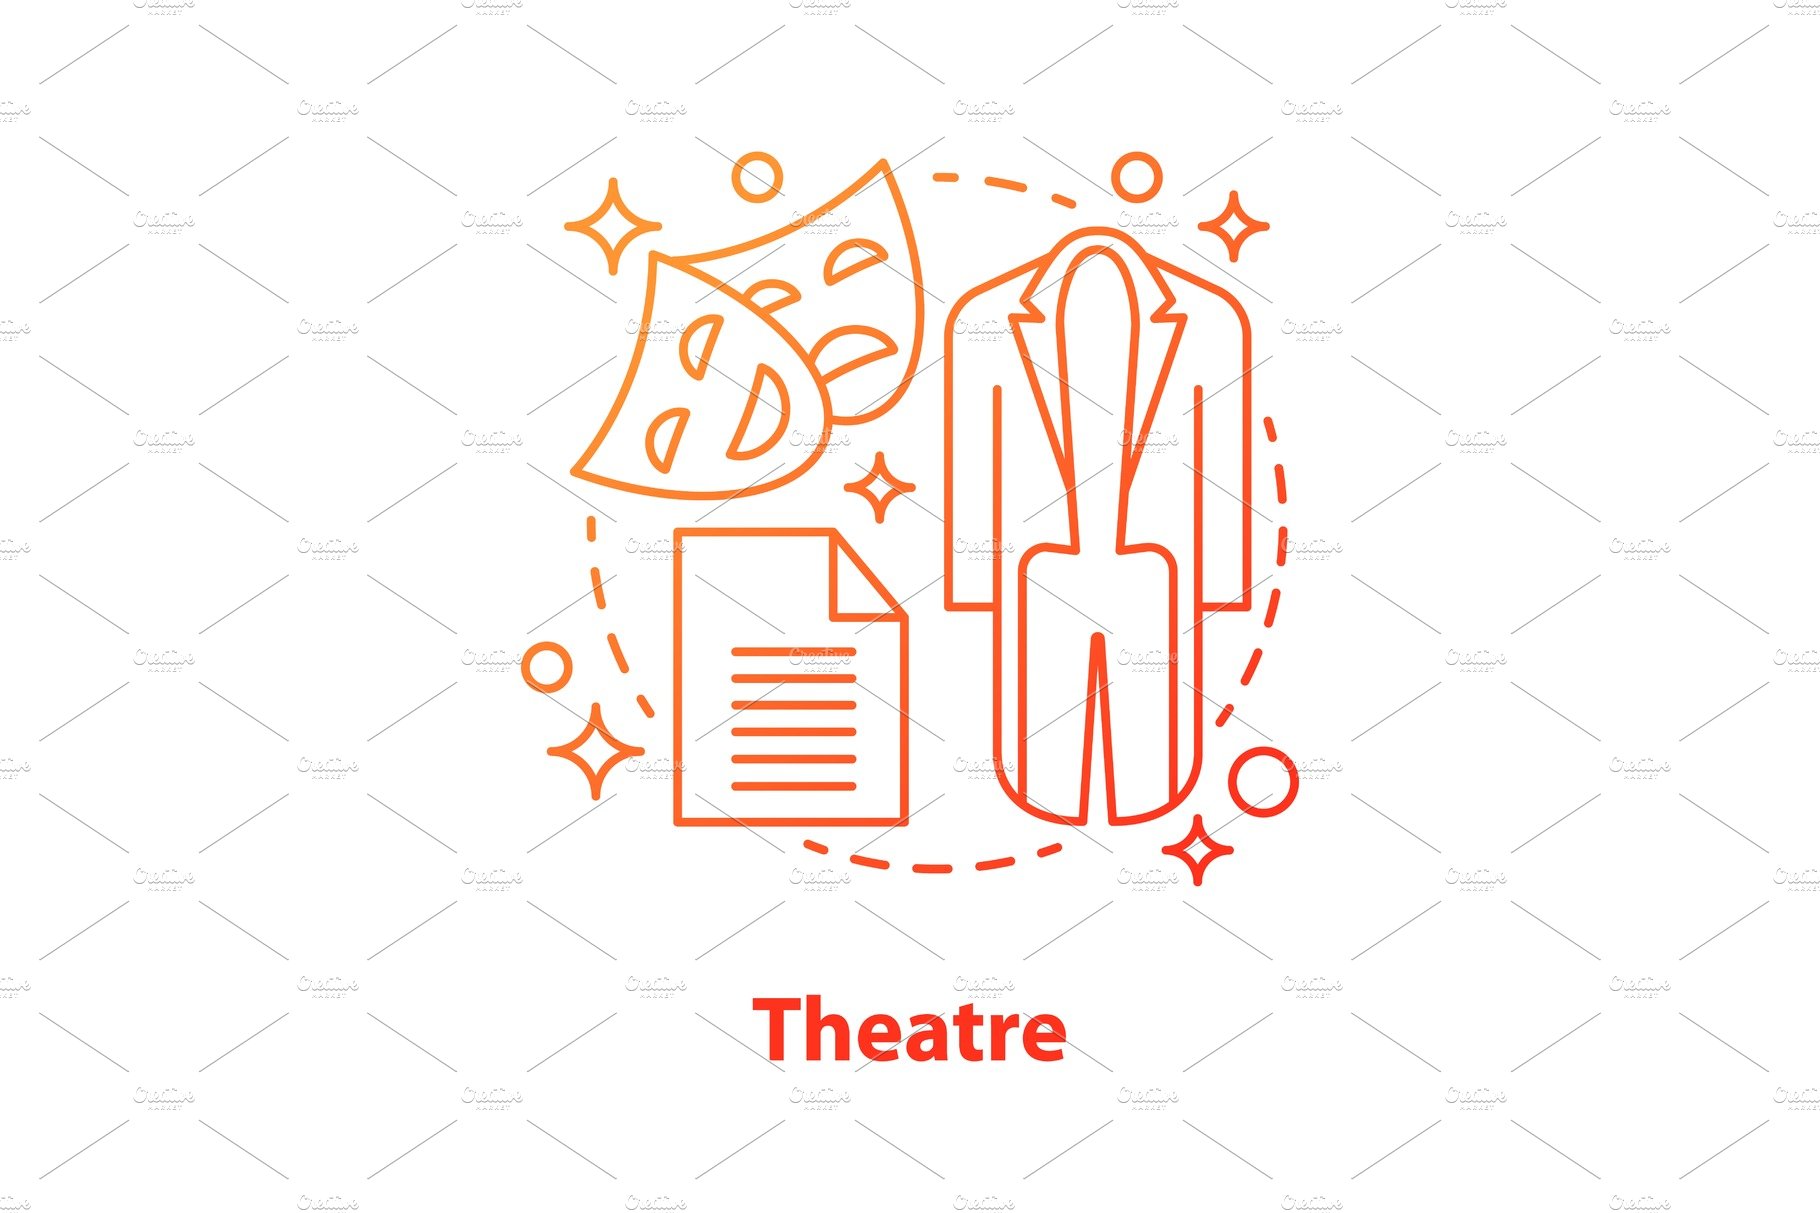 Theater concept icon cover image.